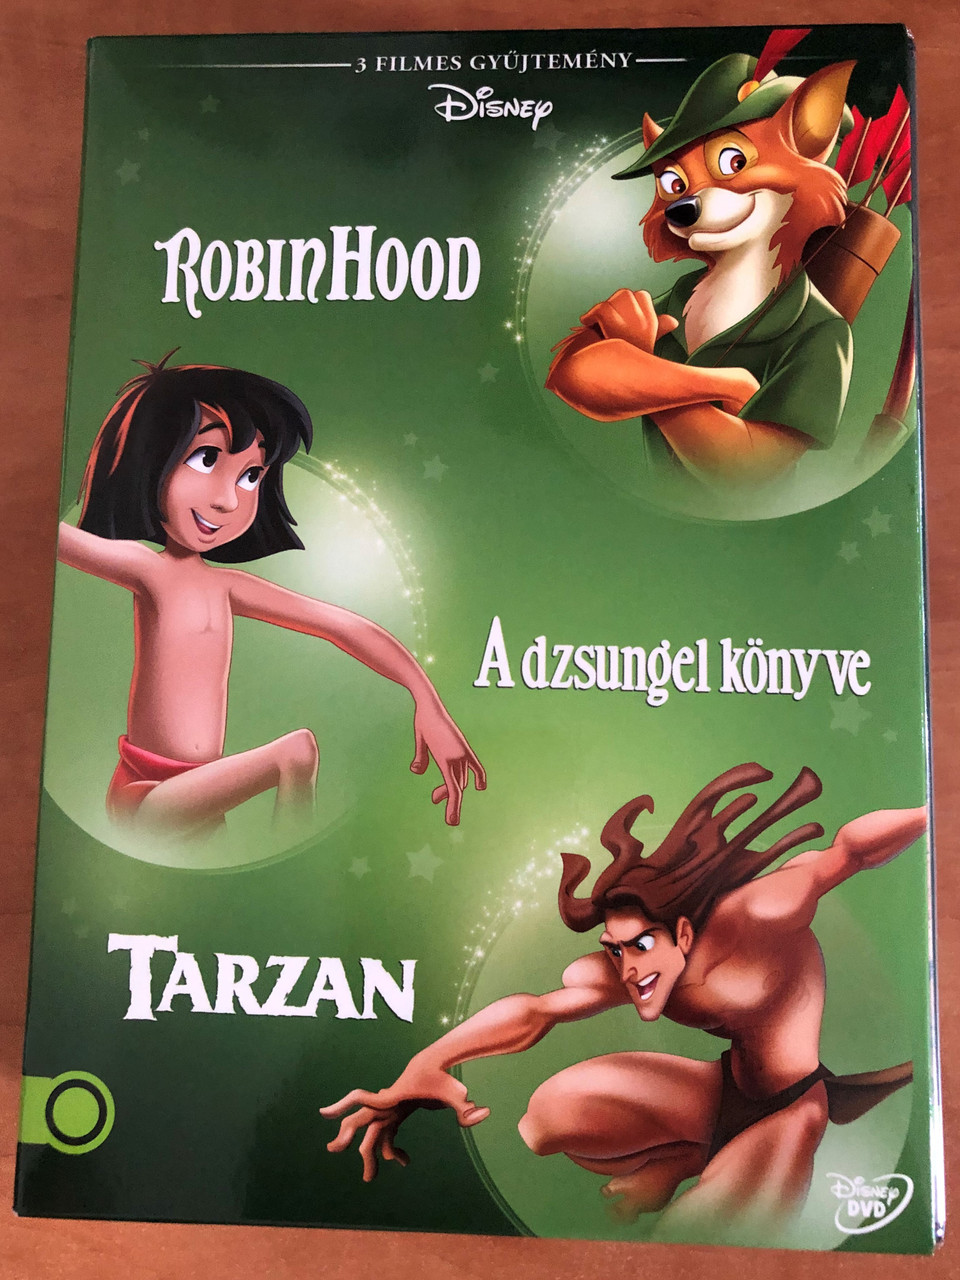 Robin Hood - Jungle Book - Tarzan DVD SET 2015 Robin Hood, A dzsungel  könyve, Tarzan / 3 filmes gyűjtemény / Disney Classics Box Set 4 -  bibleinmylanguage